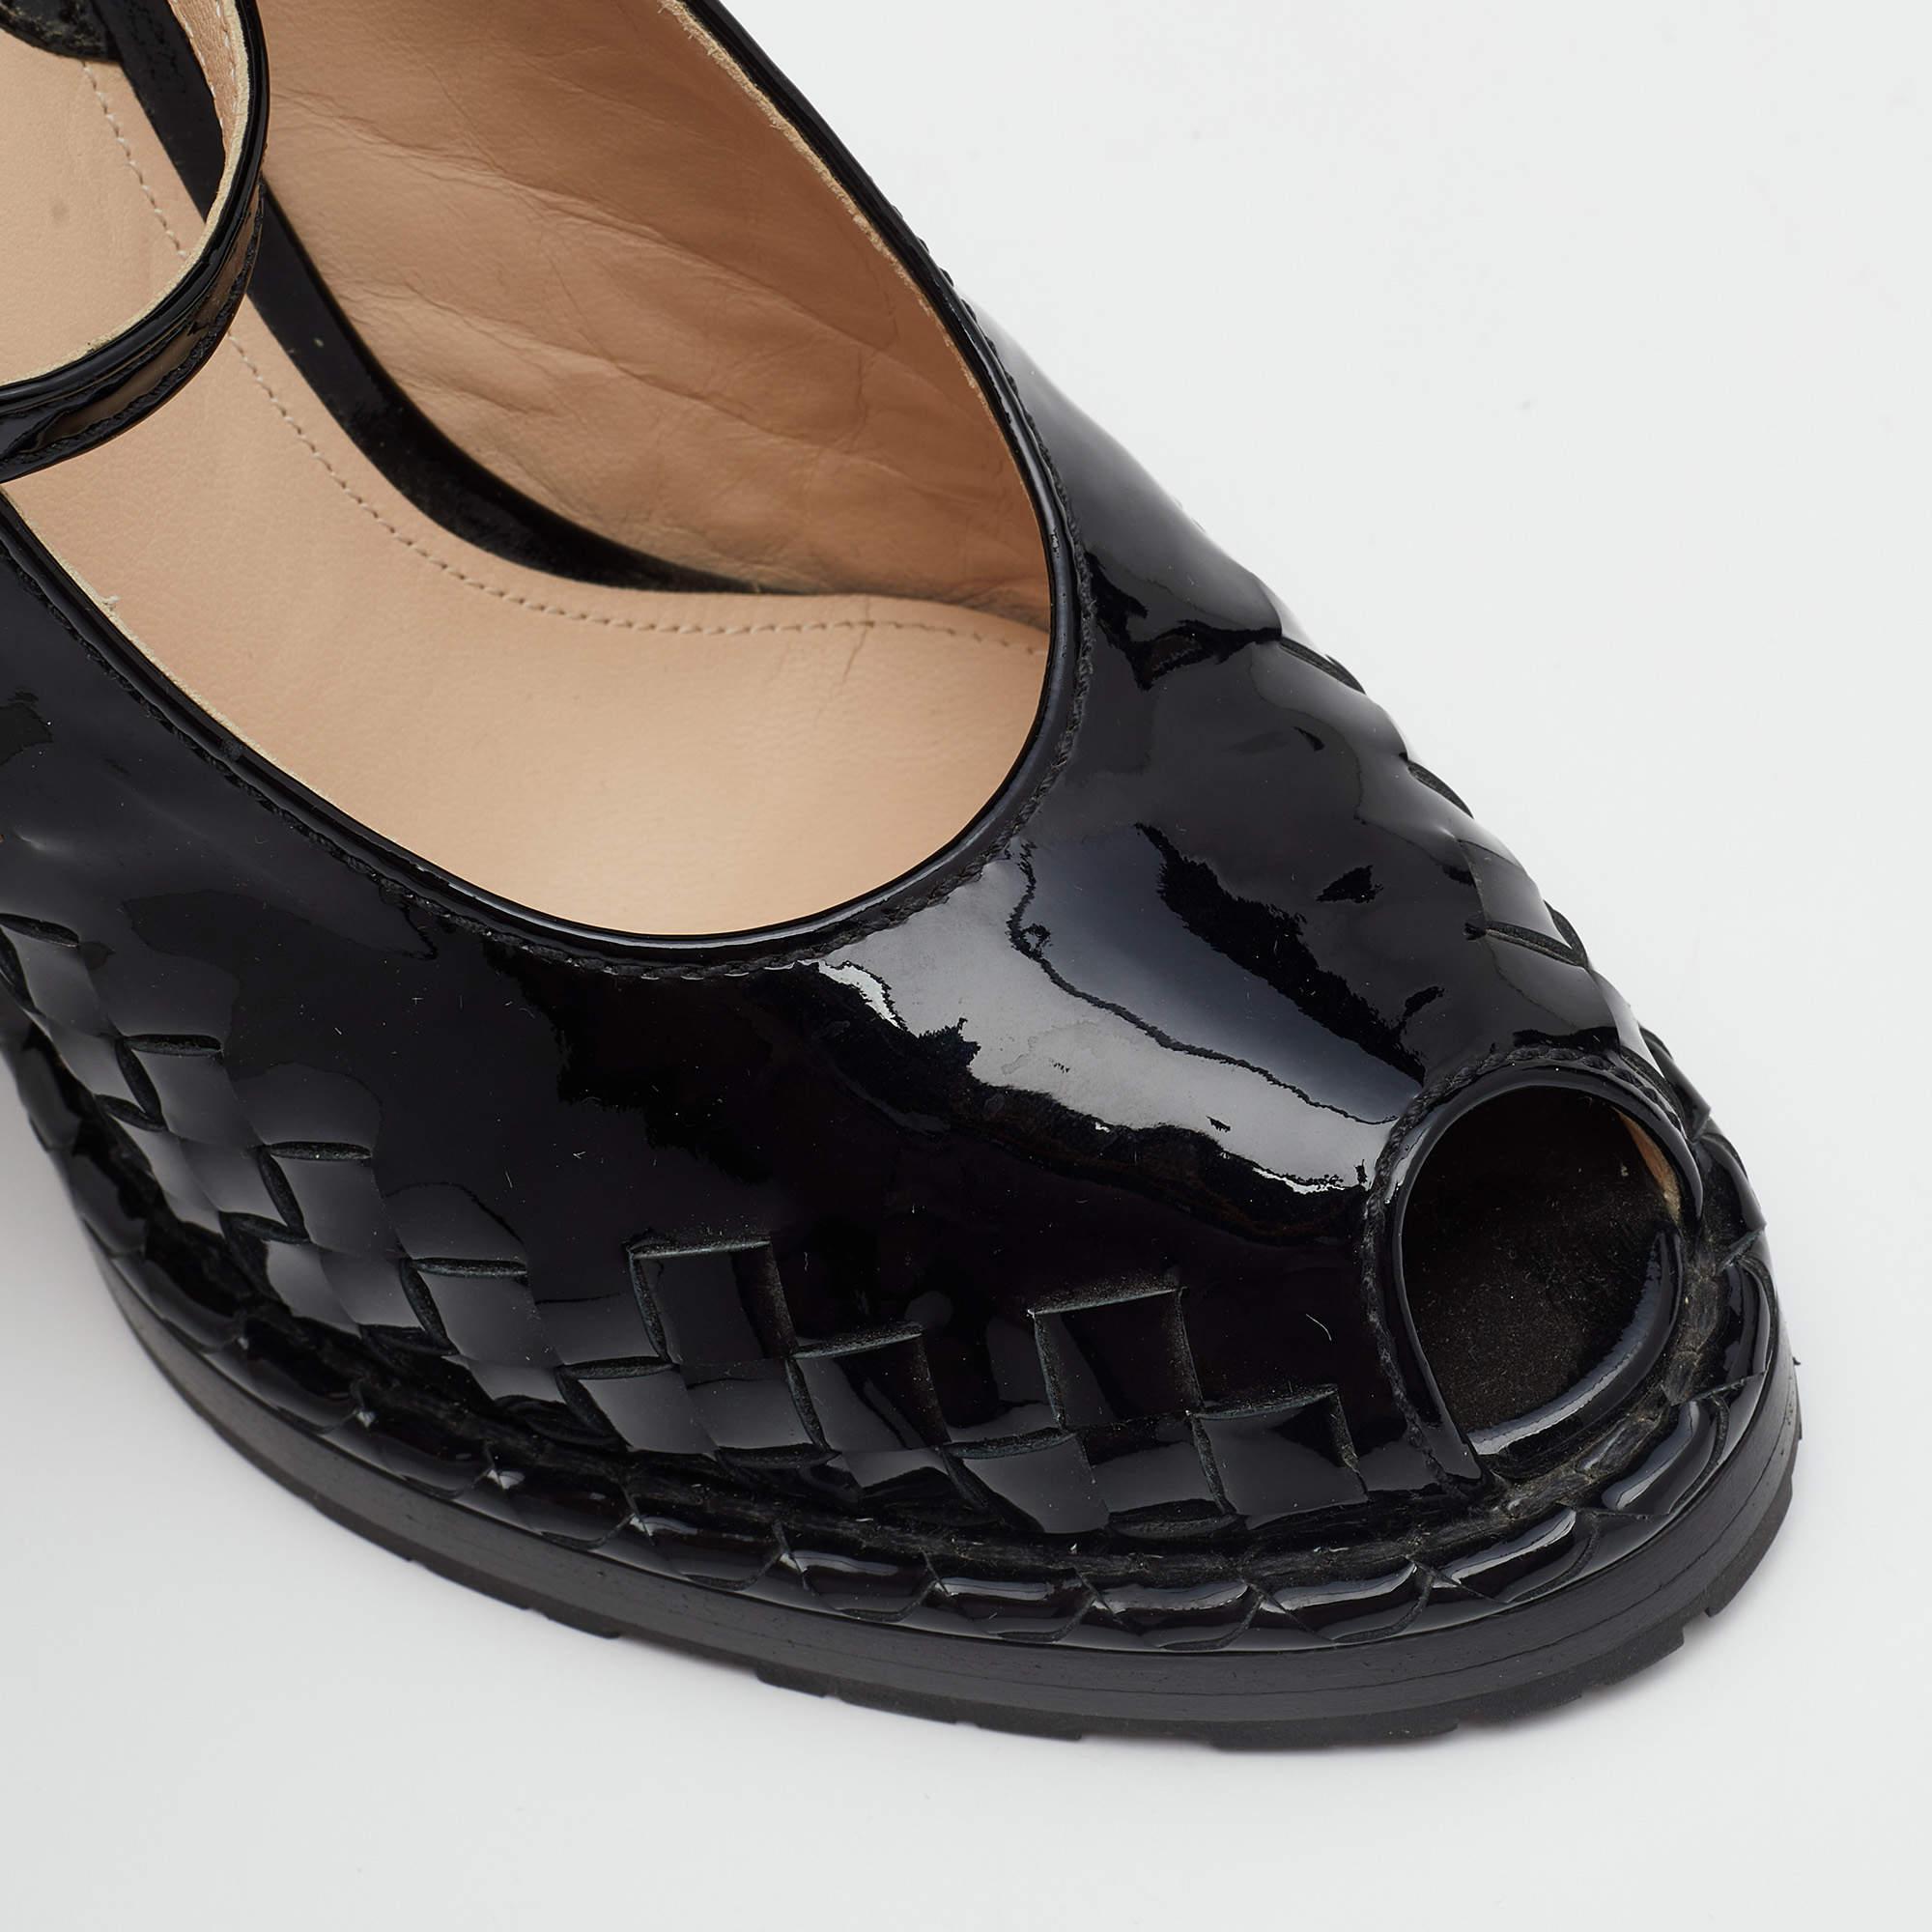 Bottega Veneta Black Intrecciato Patent Leather Wedge Sandals Size 38 For Sale 2